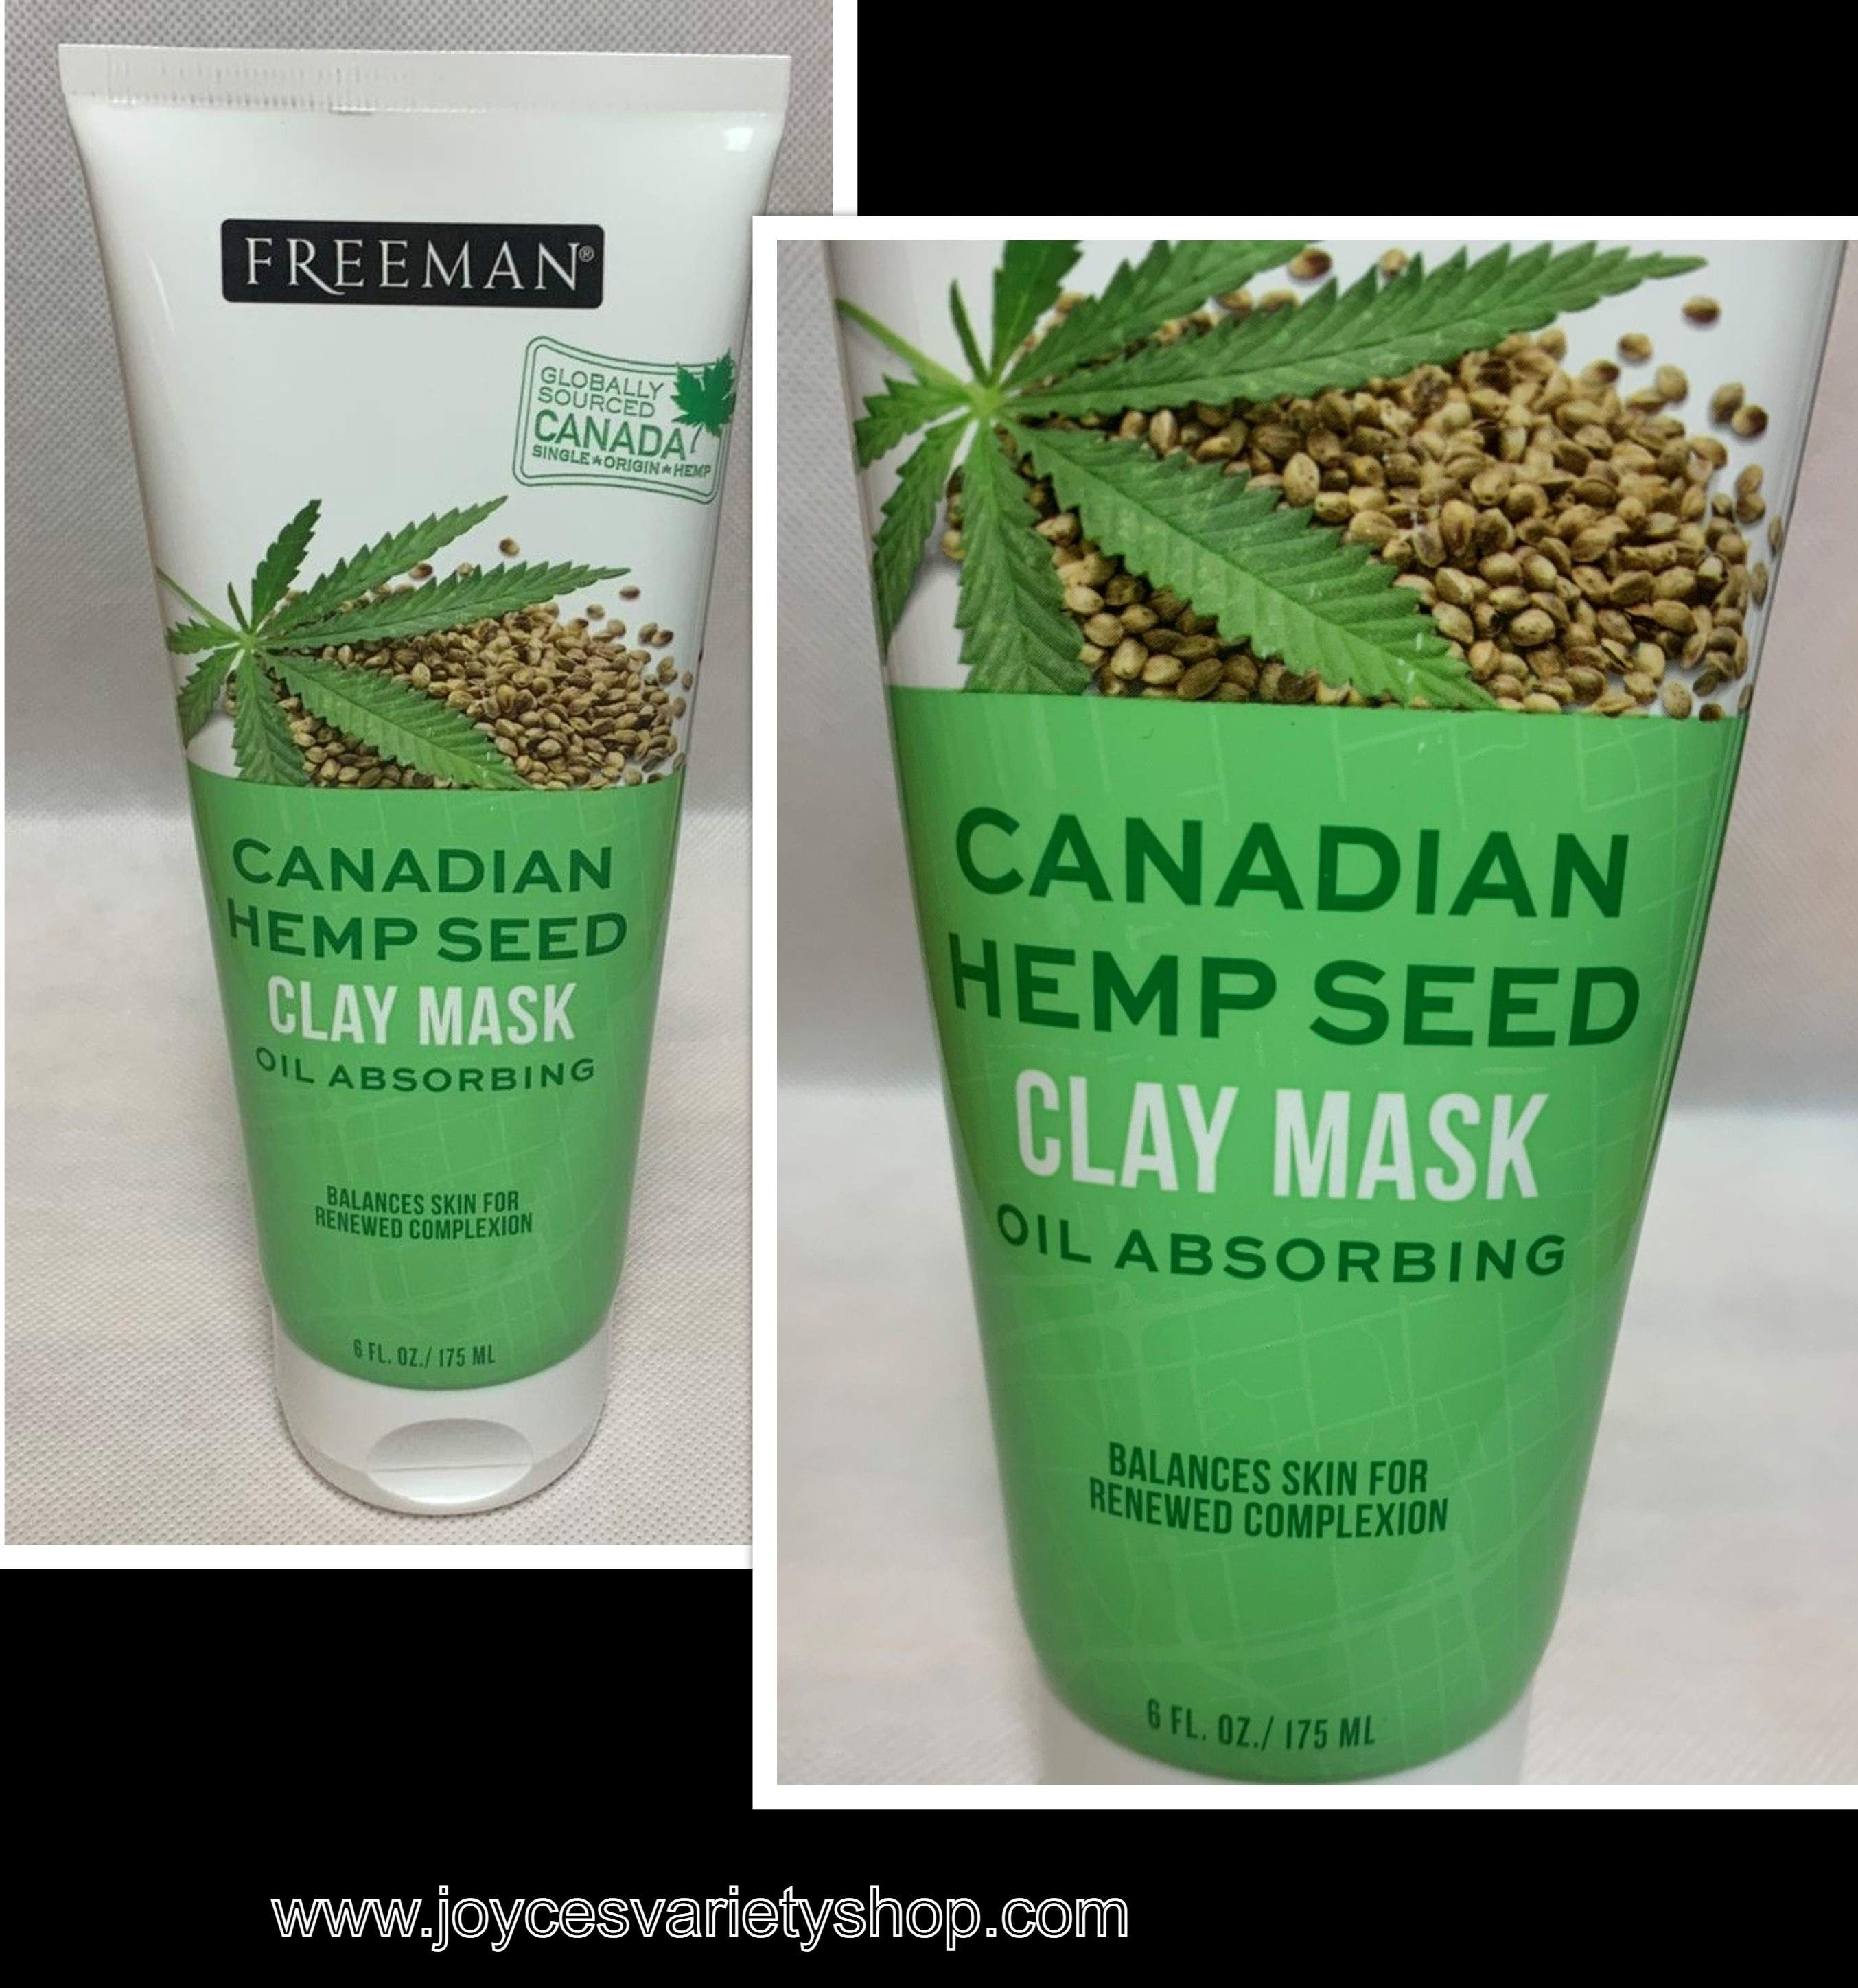 Canadian Hemp Seed Clay Mask Oil Absorbing 6 FL Oz.